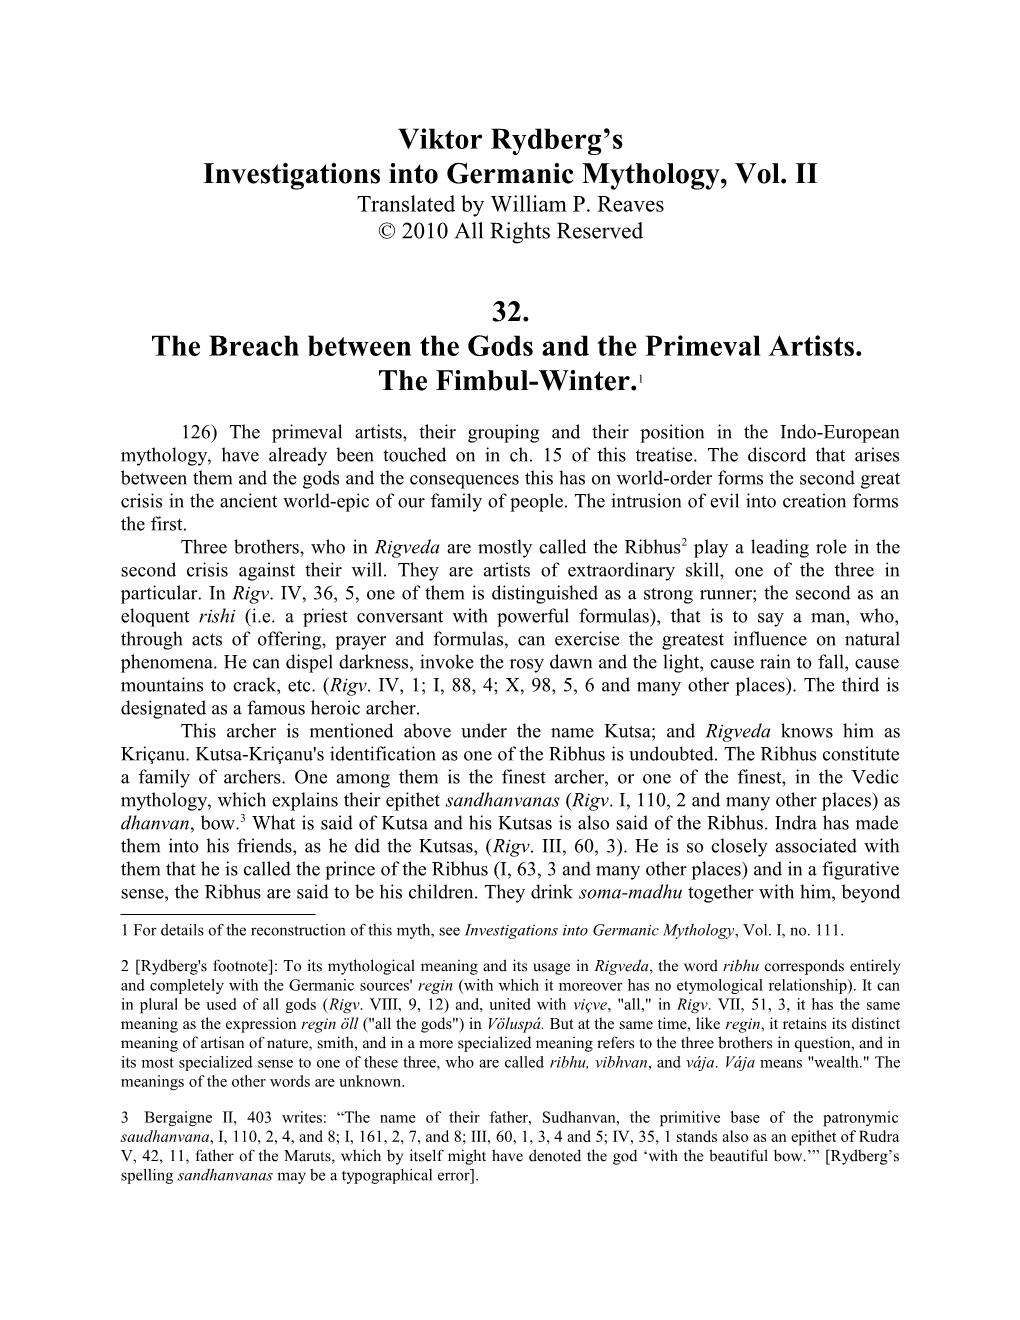 Investigations Into Germanic Mythology, Vol. II